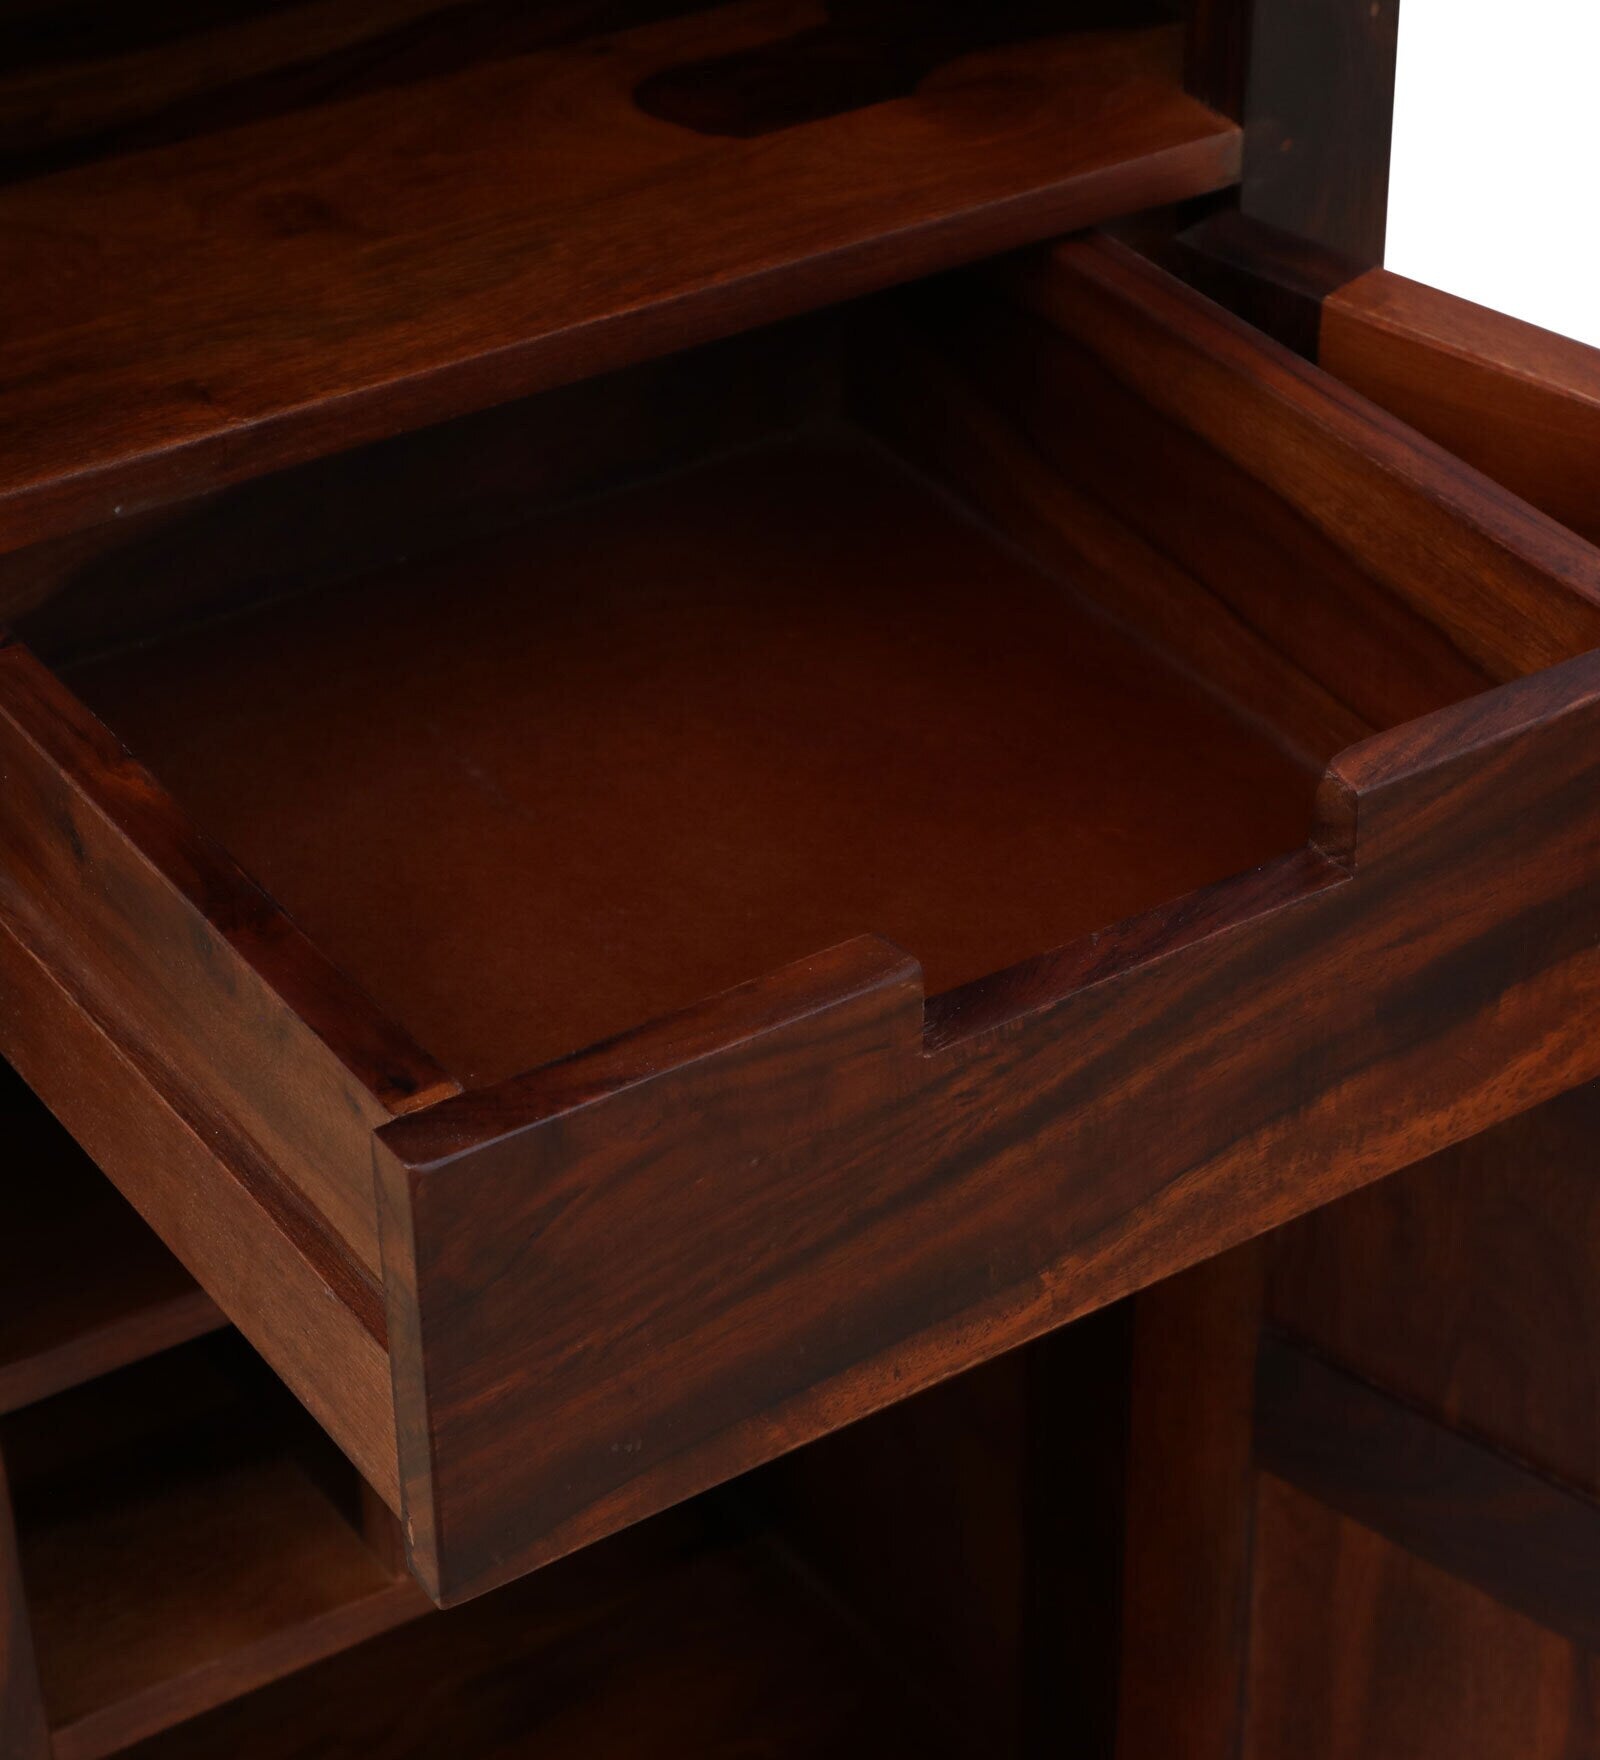 Vandena Solid Wood Bar Cabinet In Honey Oak Finish By Rajwada - Rajwada Furnish